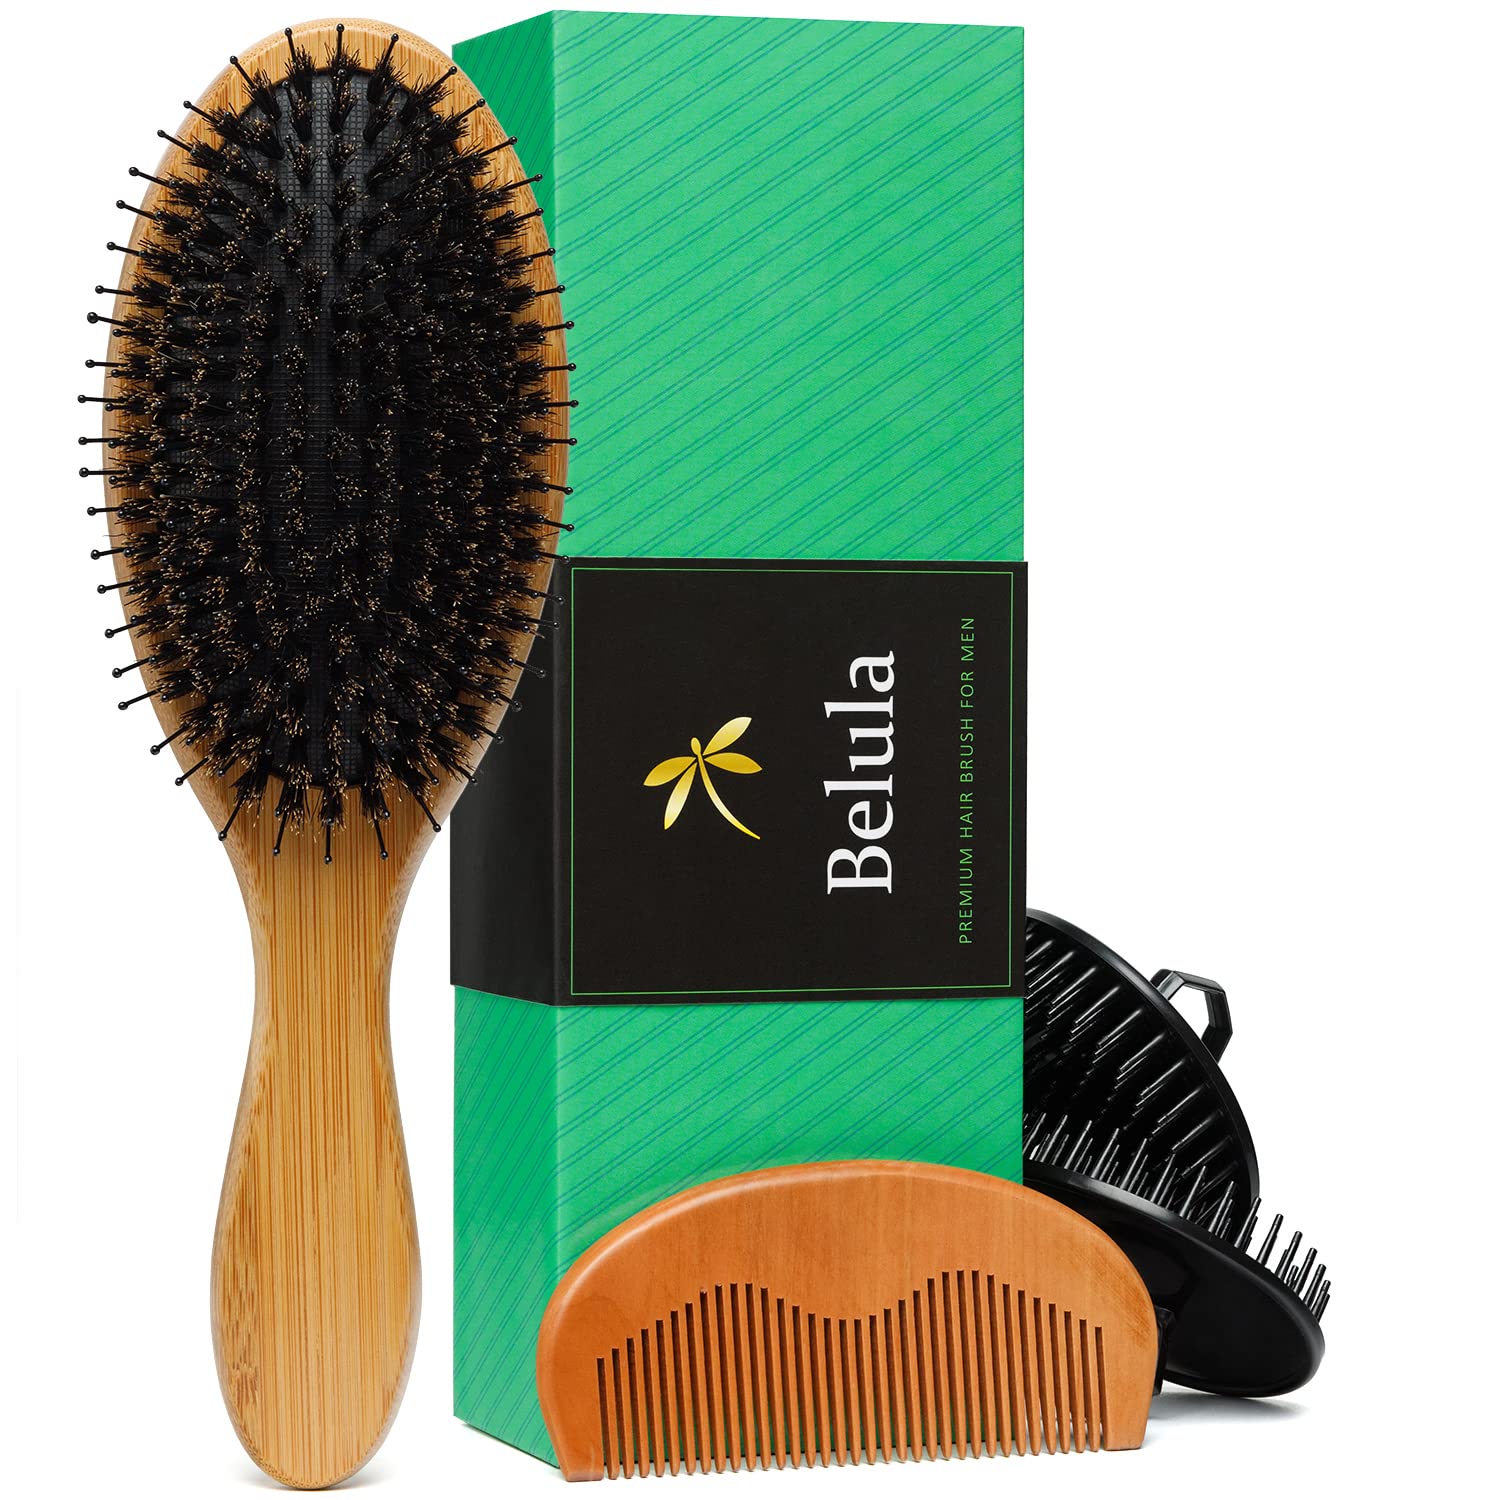 Belula Boar Bristle Hair Brush for Men Set.Styling Mens' Hair Brush with  Nylon Pins. Boar Bristle Brush, 2 x Palm Brush, Wooden Comb & Travel Bag  Included.